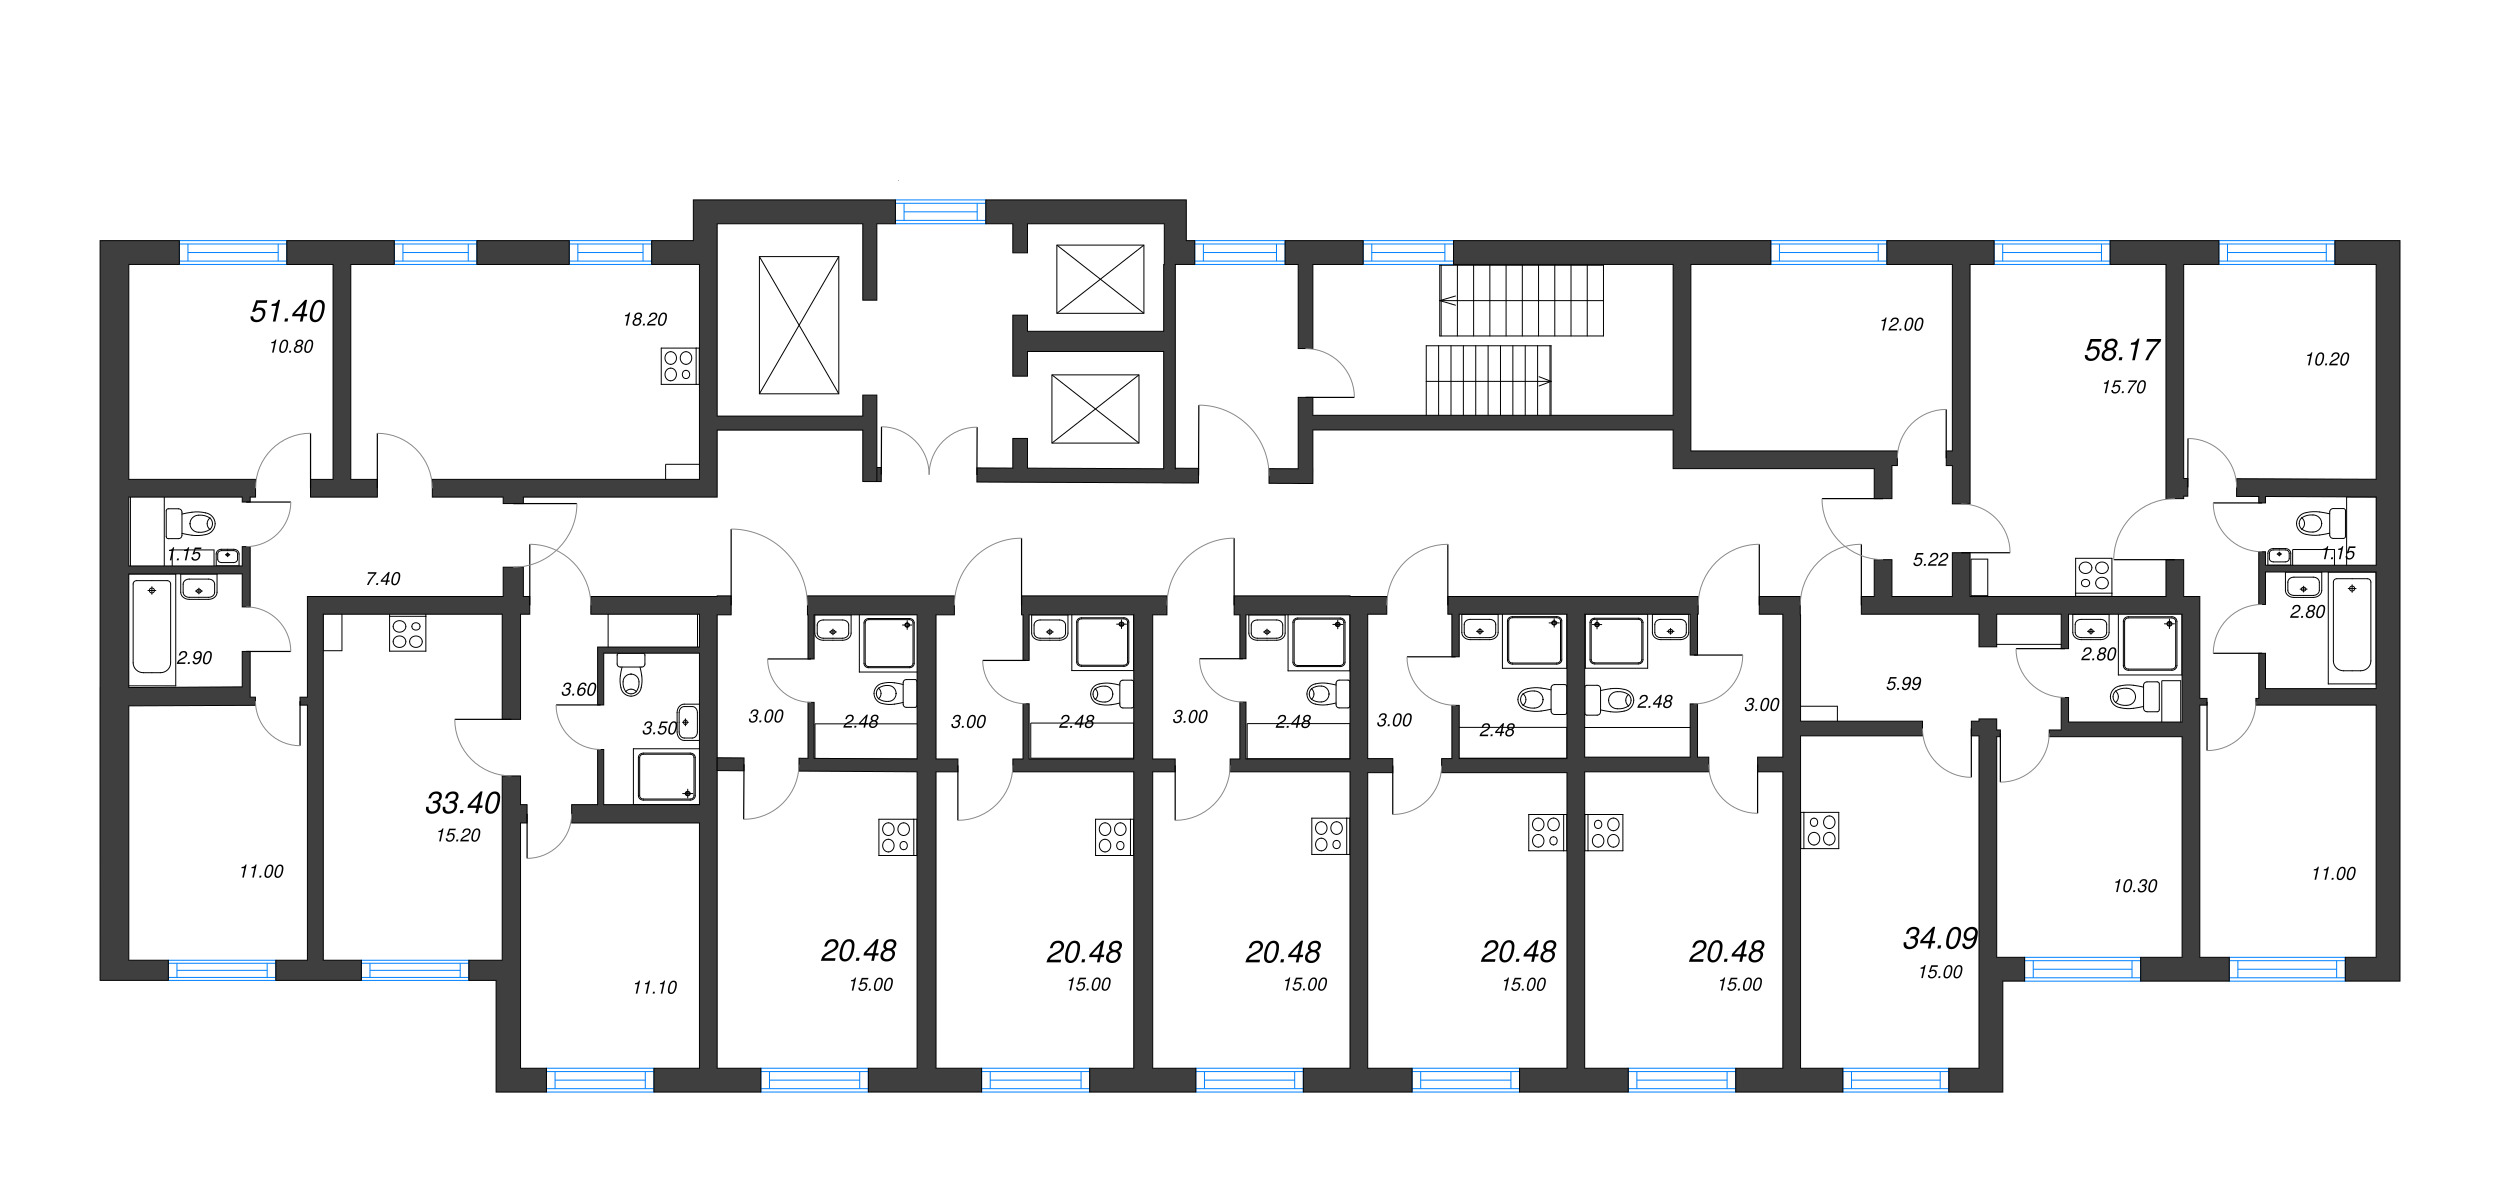 4-комнатная (Евро) квартира, 58.17 м² - планировка этажа